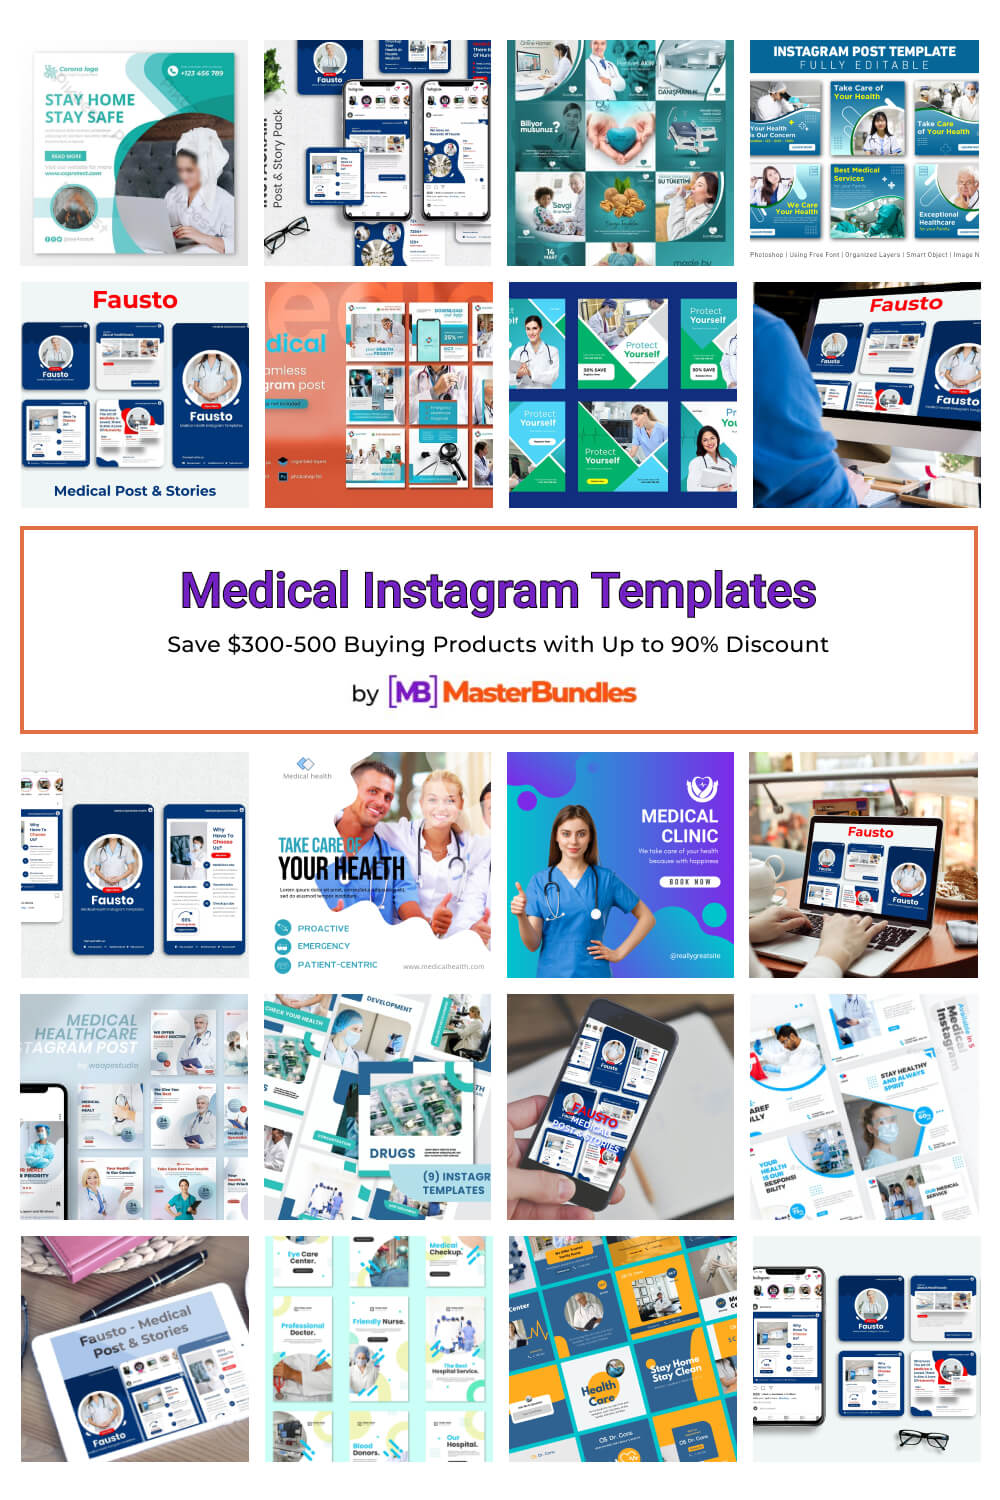 medical instagram templates pinterest image.